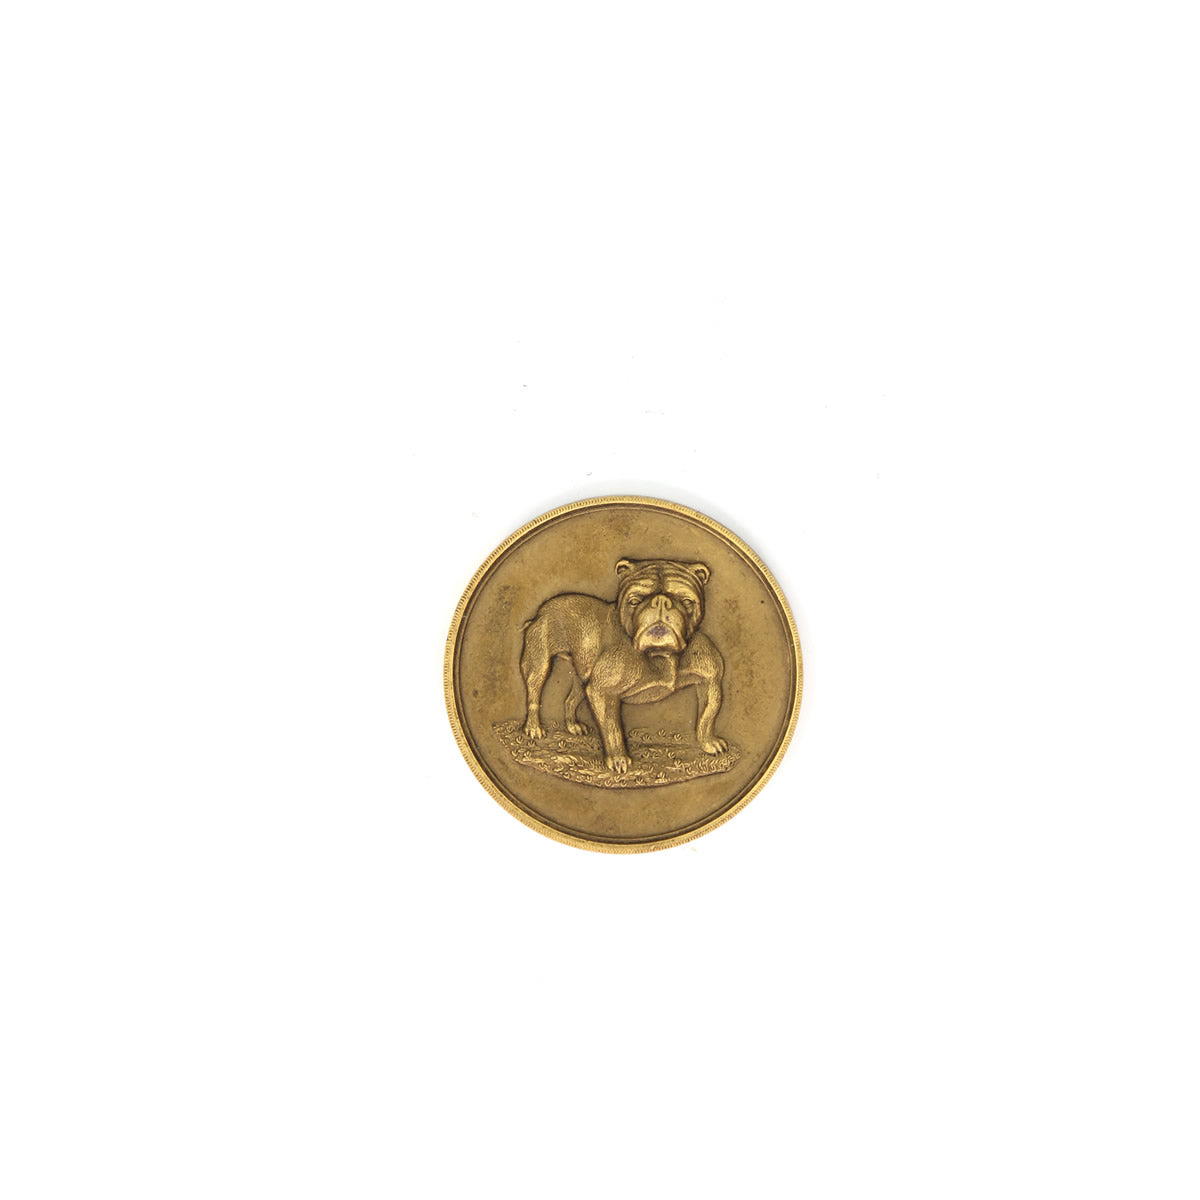 Northumberland Bulldog Club Medal (Gold Tone), c.1920's